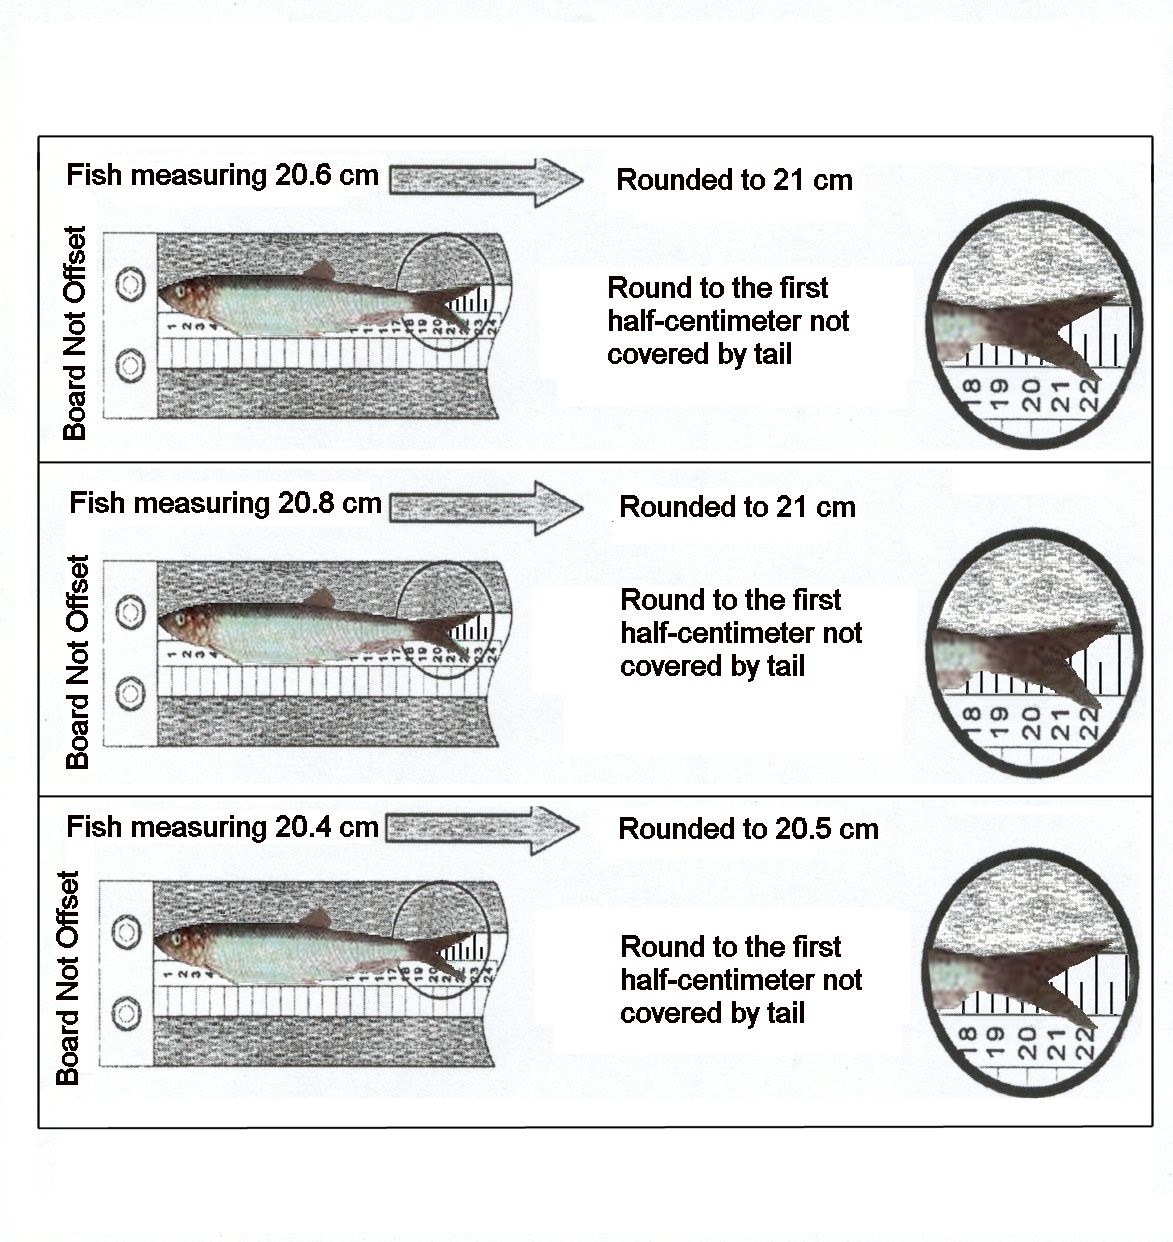 Small fish protocol in the purse seine herring fishery in NAFO Division 4T